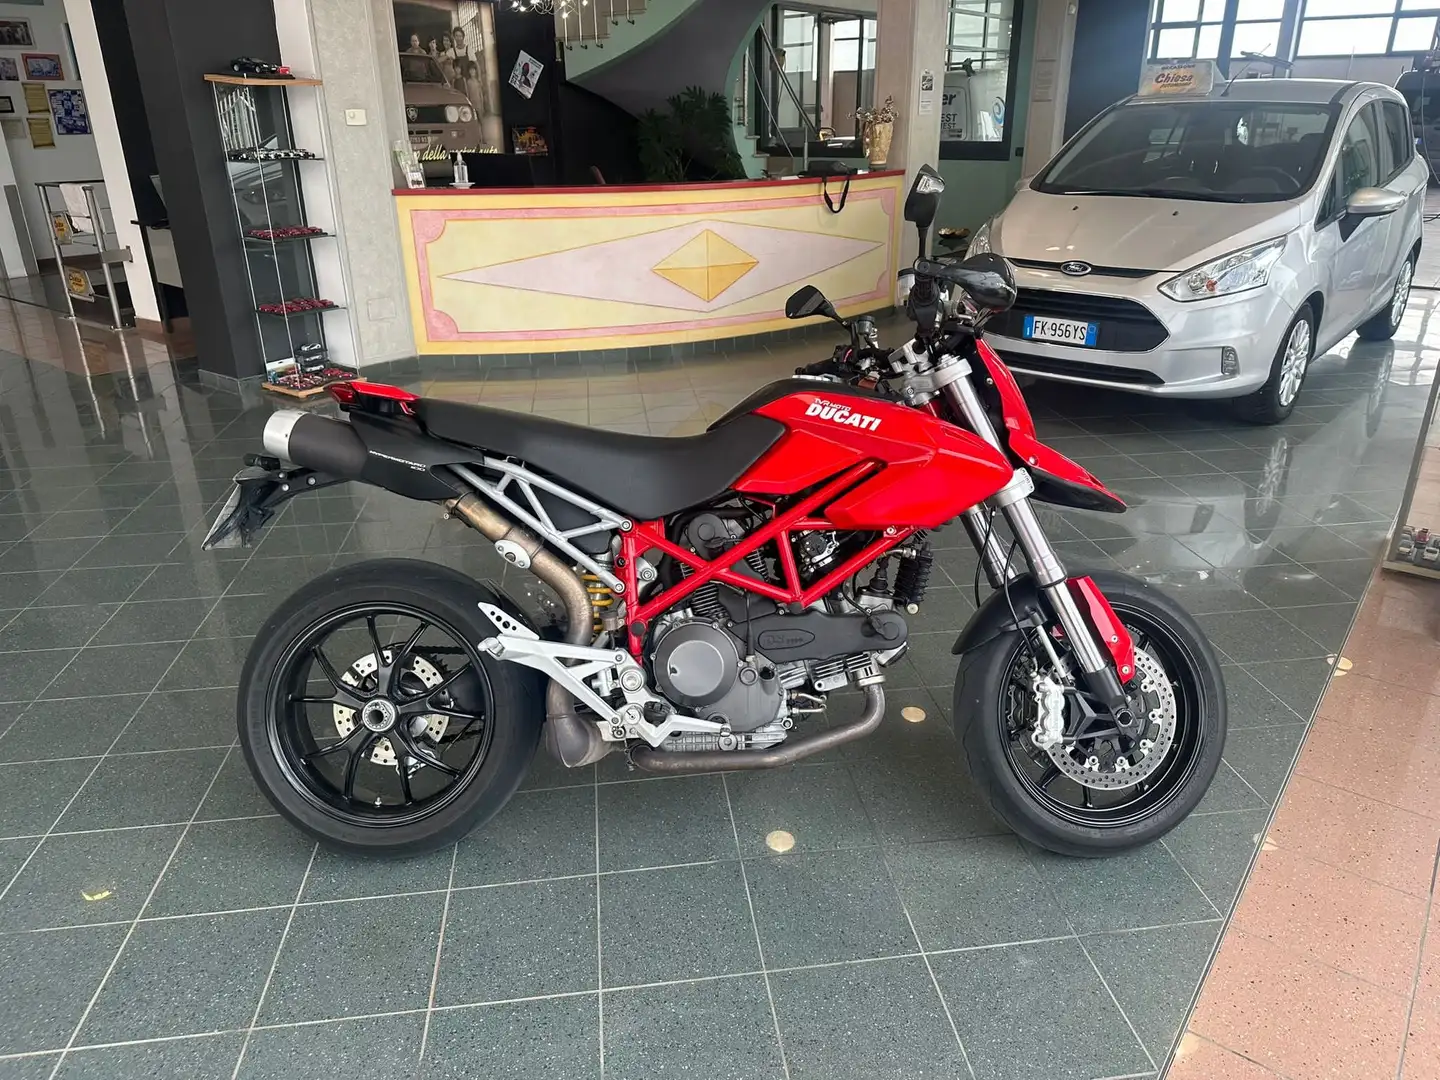 Ducati Hypermotard 1100 Red - 2